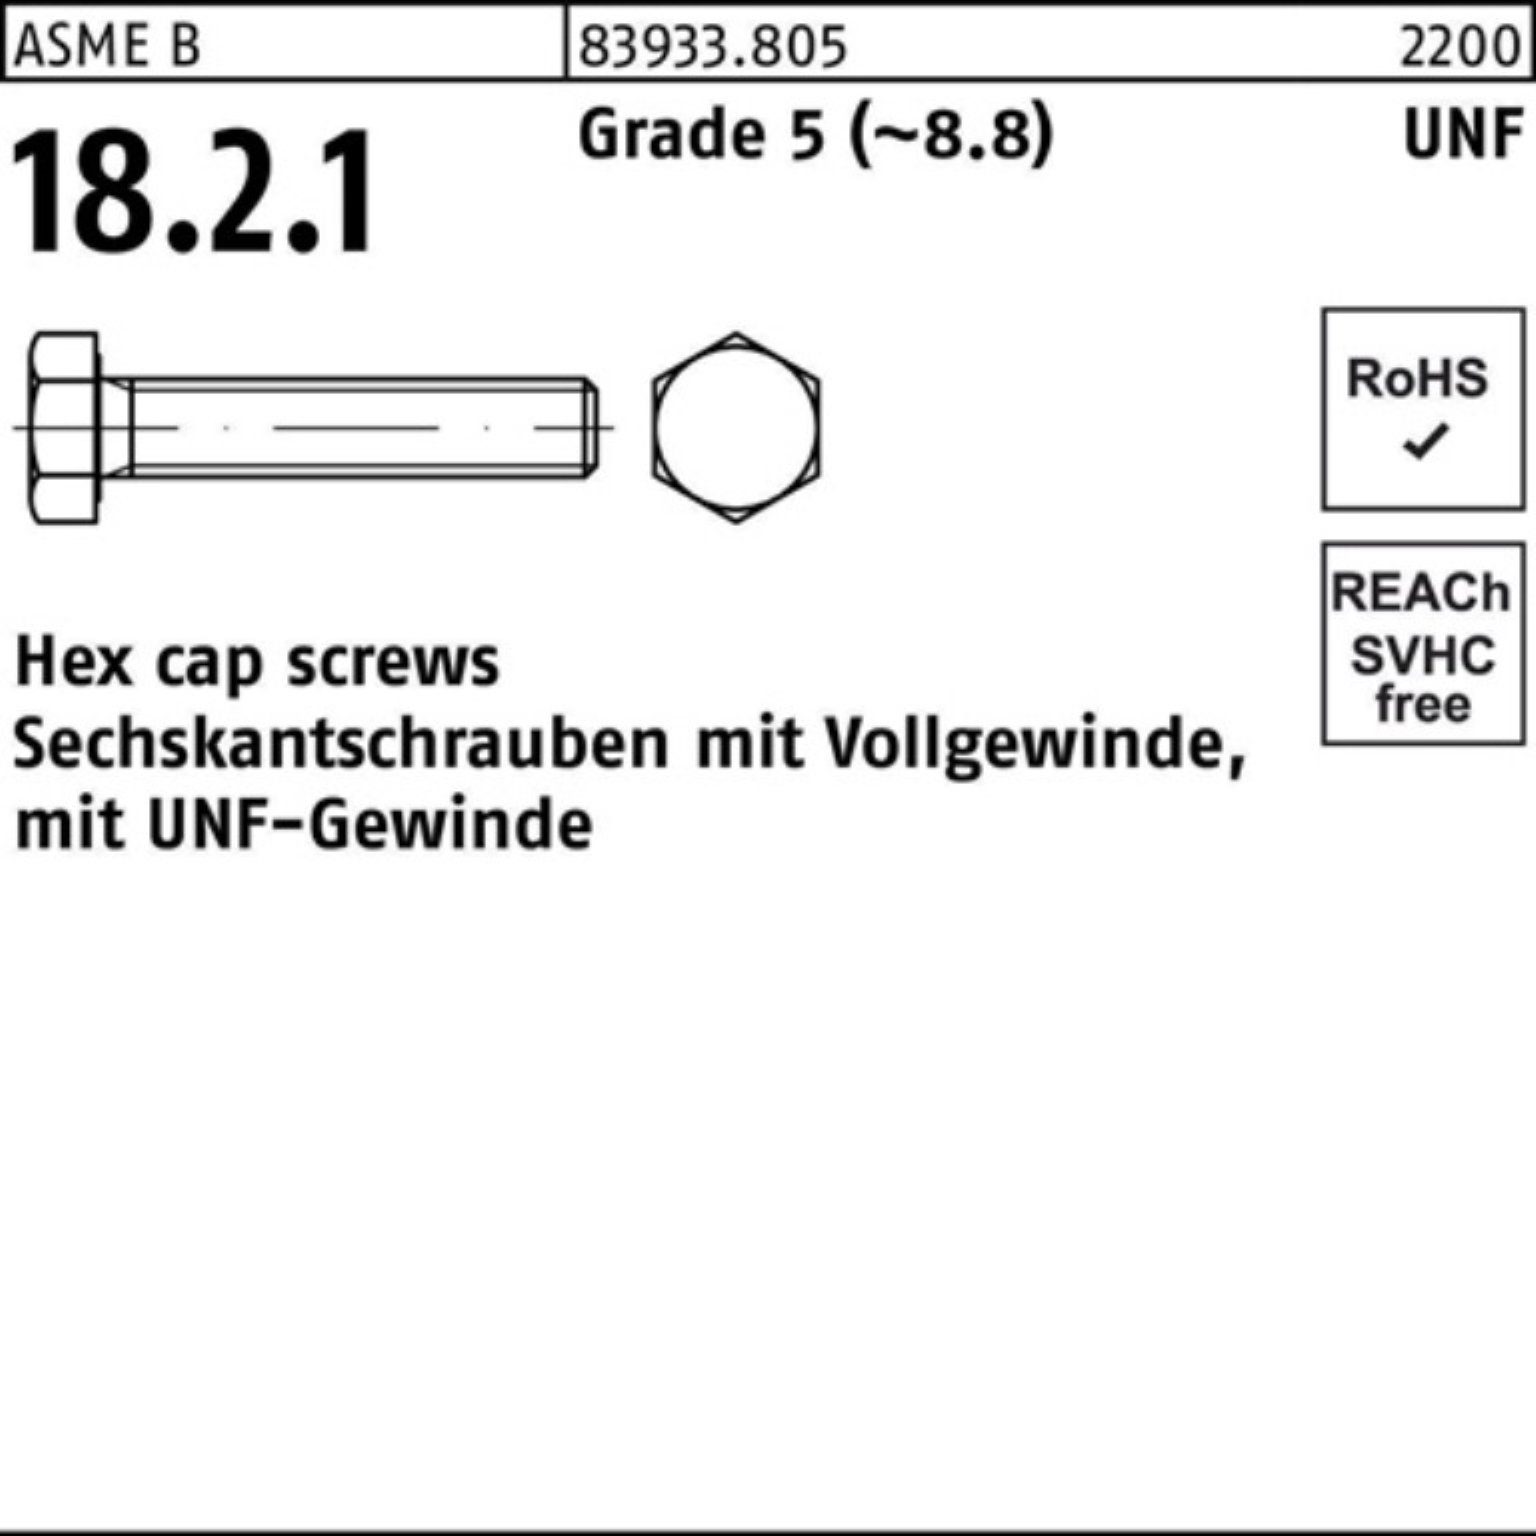 Reyher Sechskantschraube 100er Pack Sechskantschraube R 83933 UNF-Gewinde VG 1/2x 1 Grade 5 (8